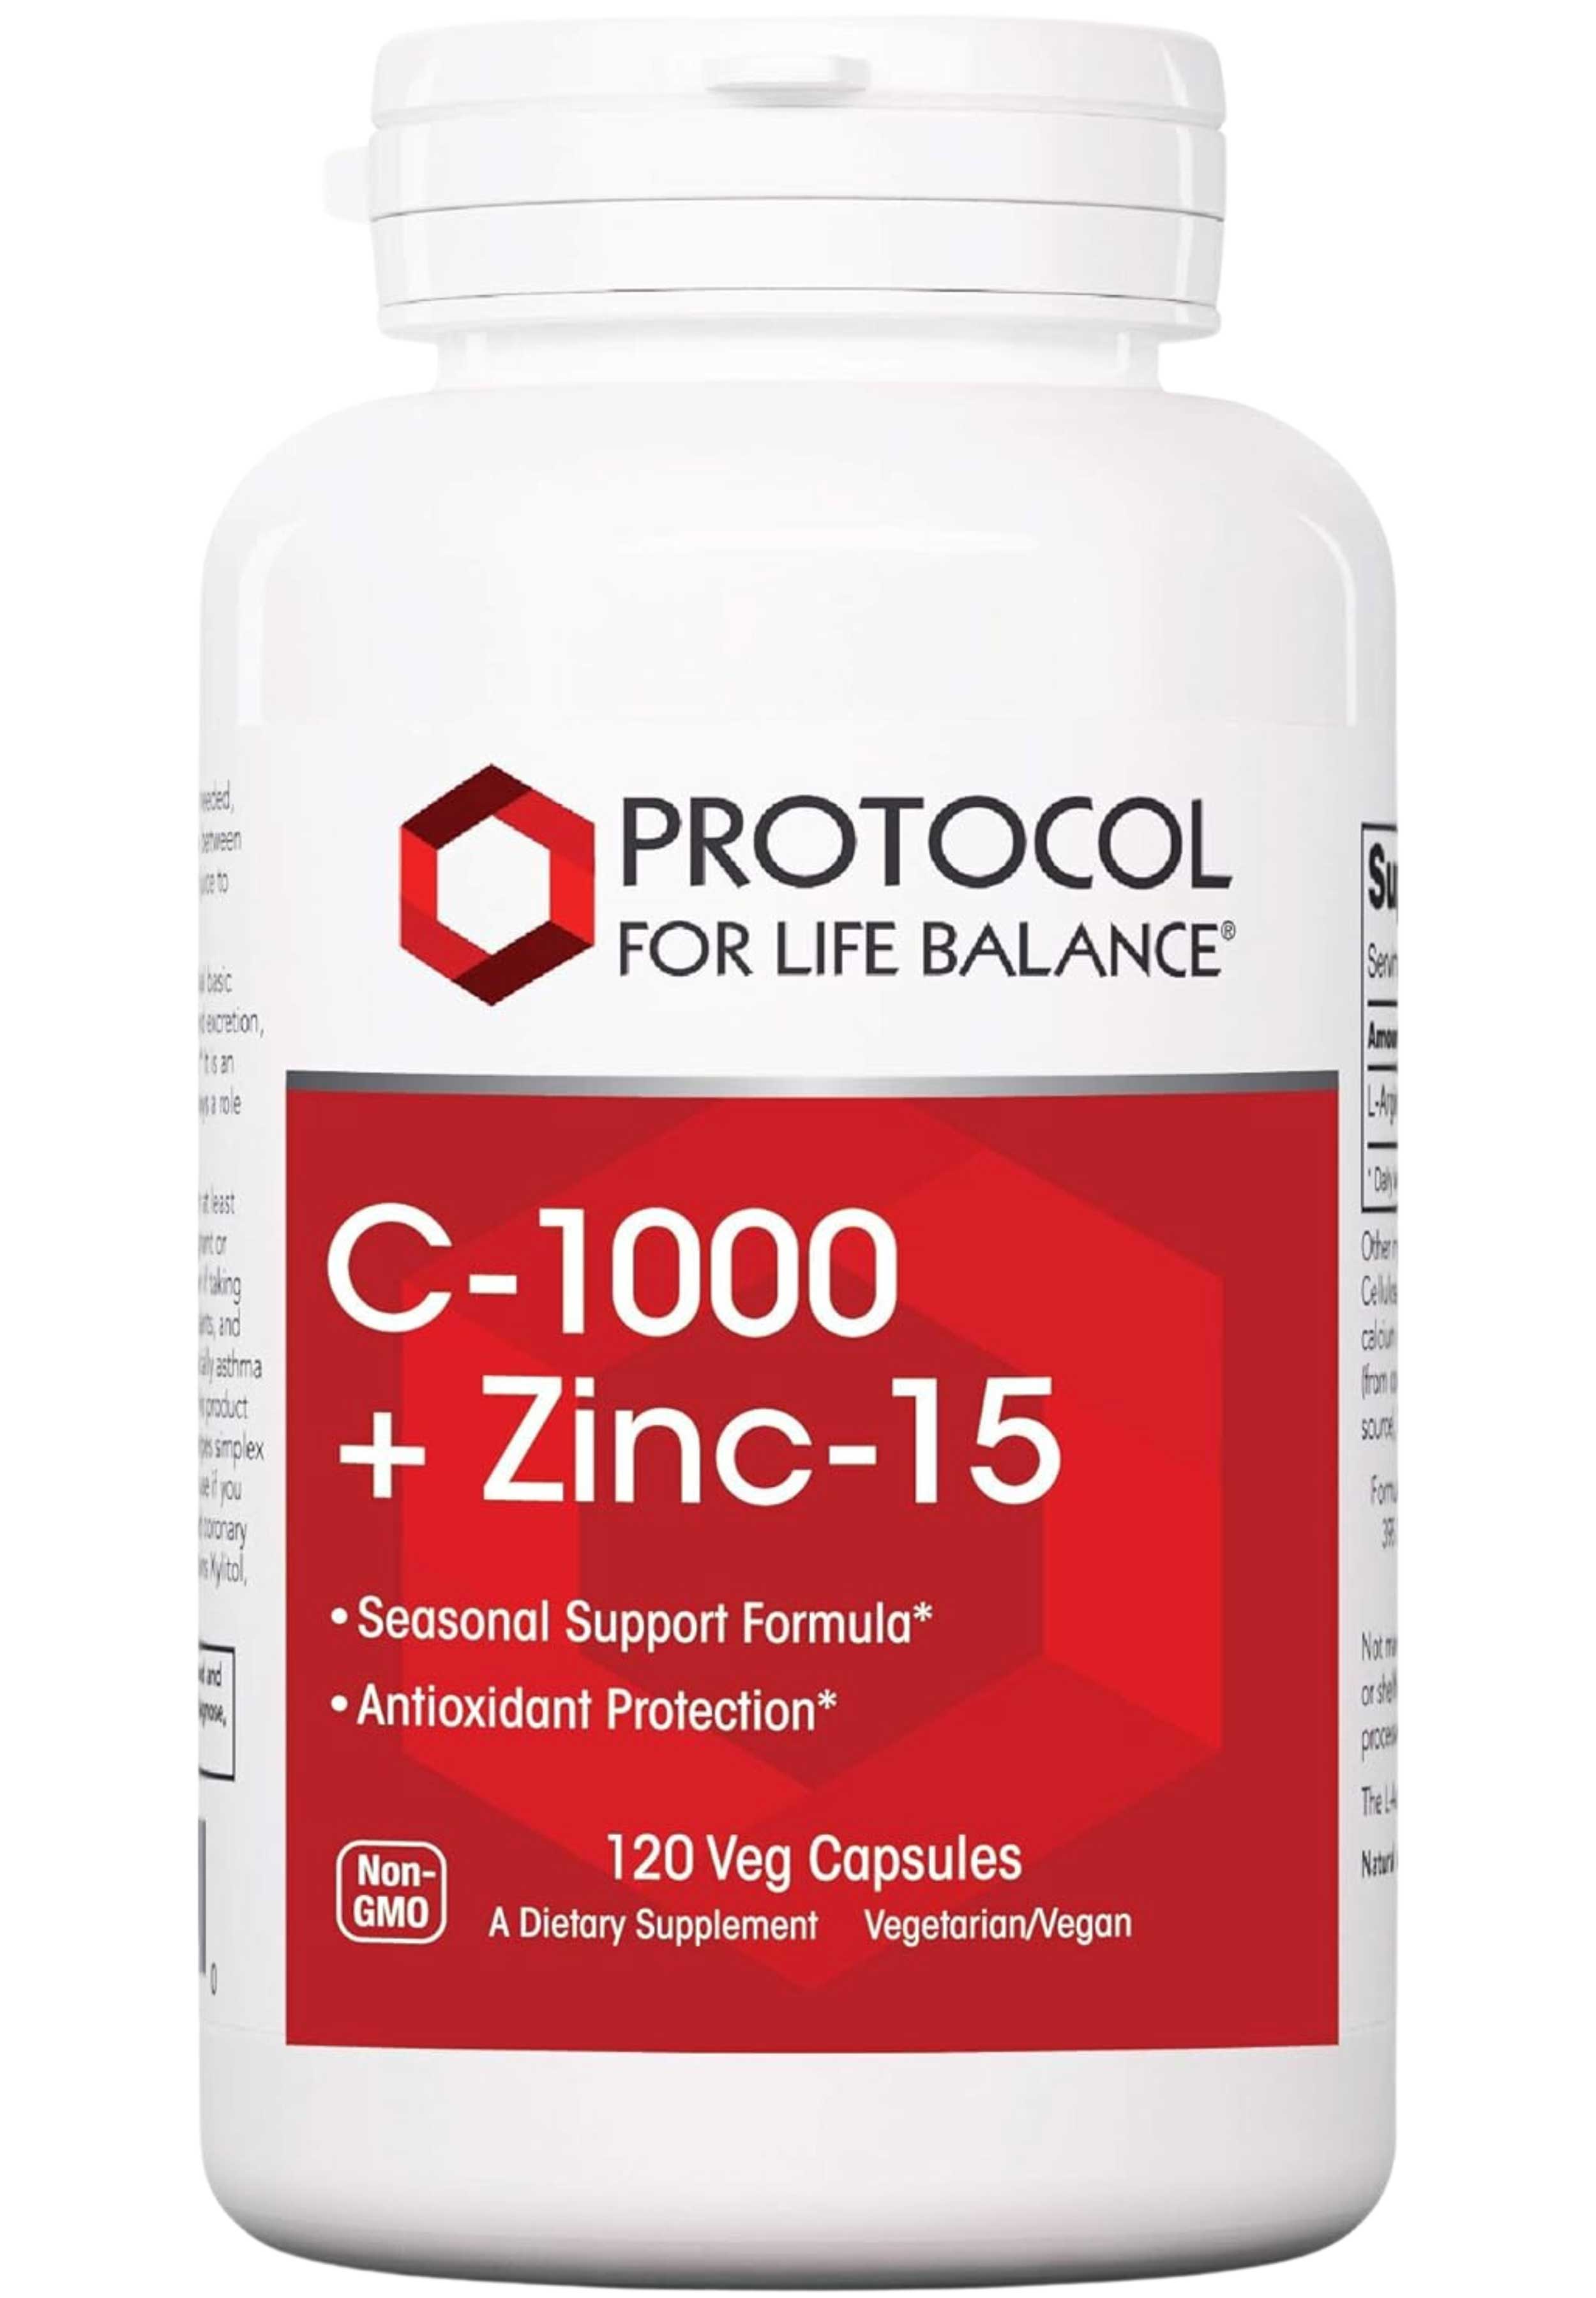 Protocol for Life Balance C-1000 + Zinc-15